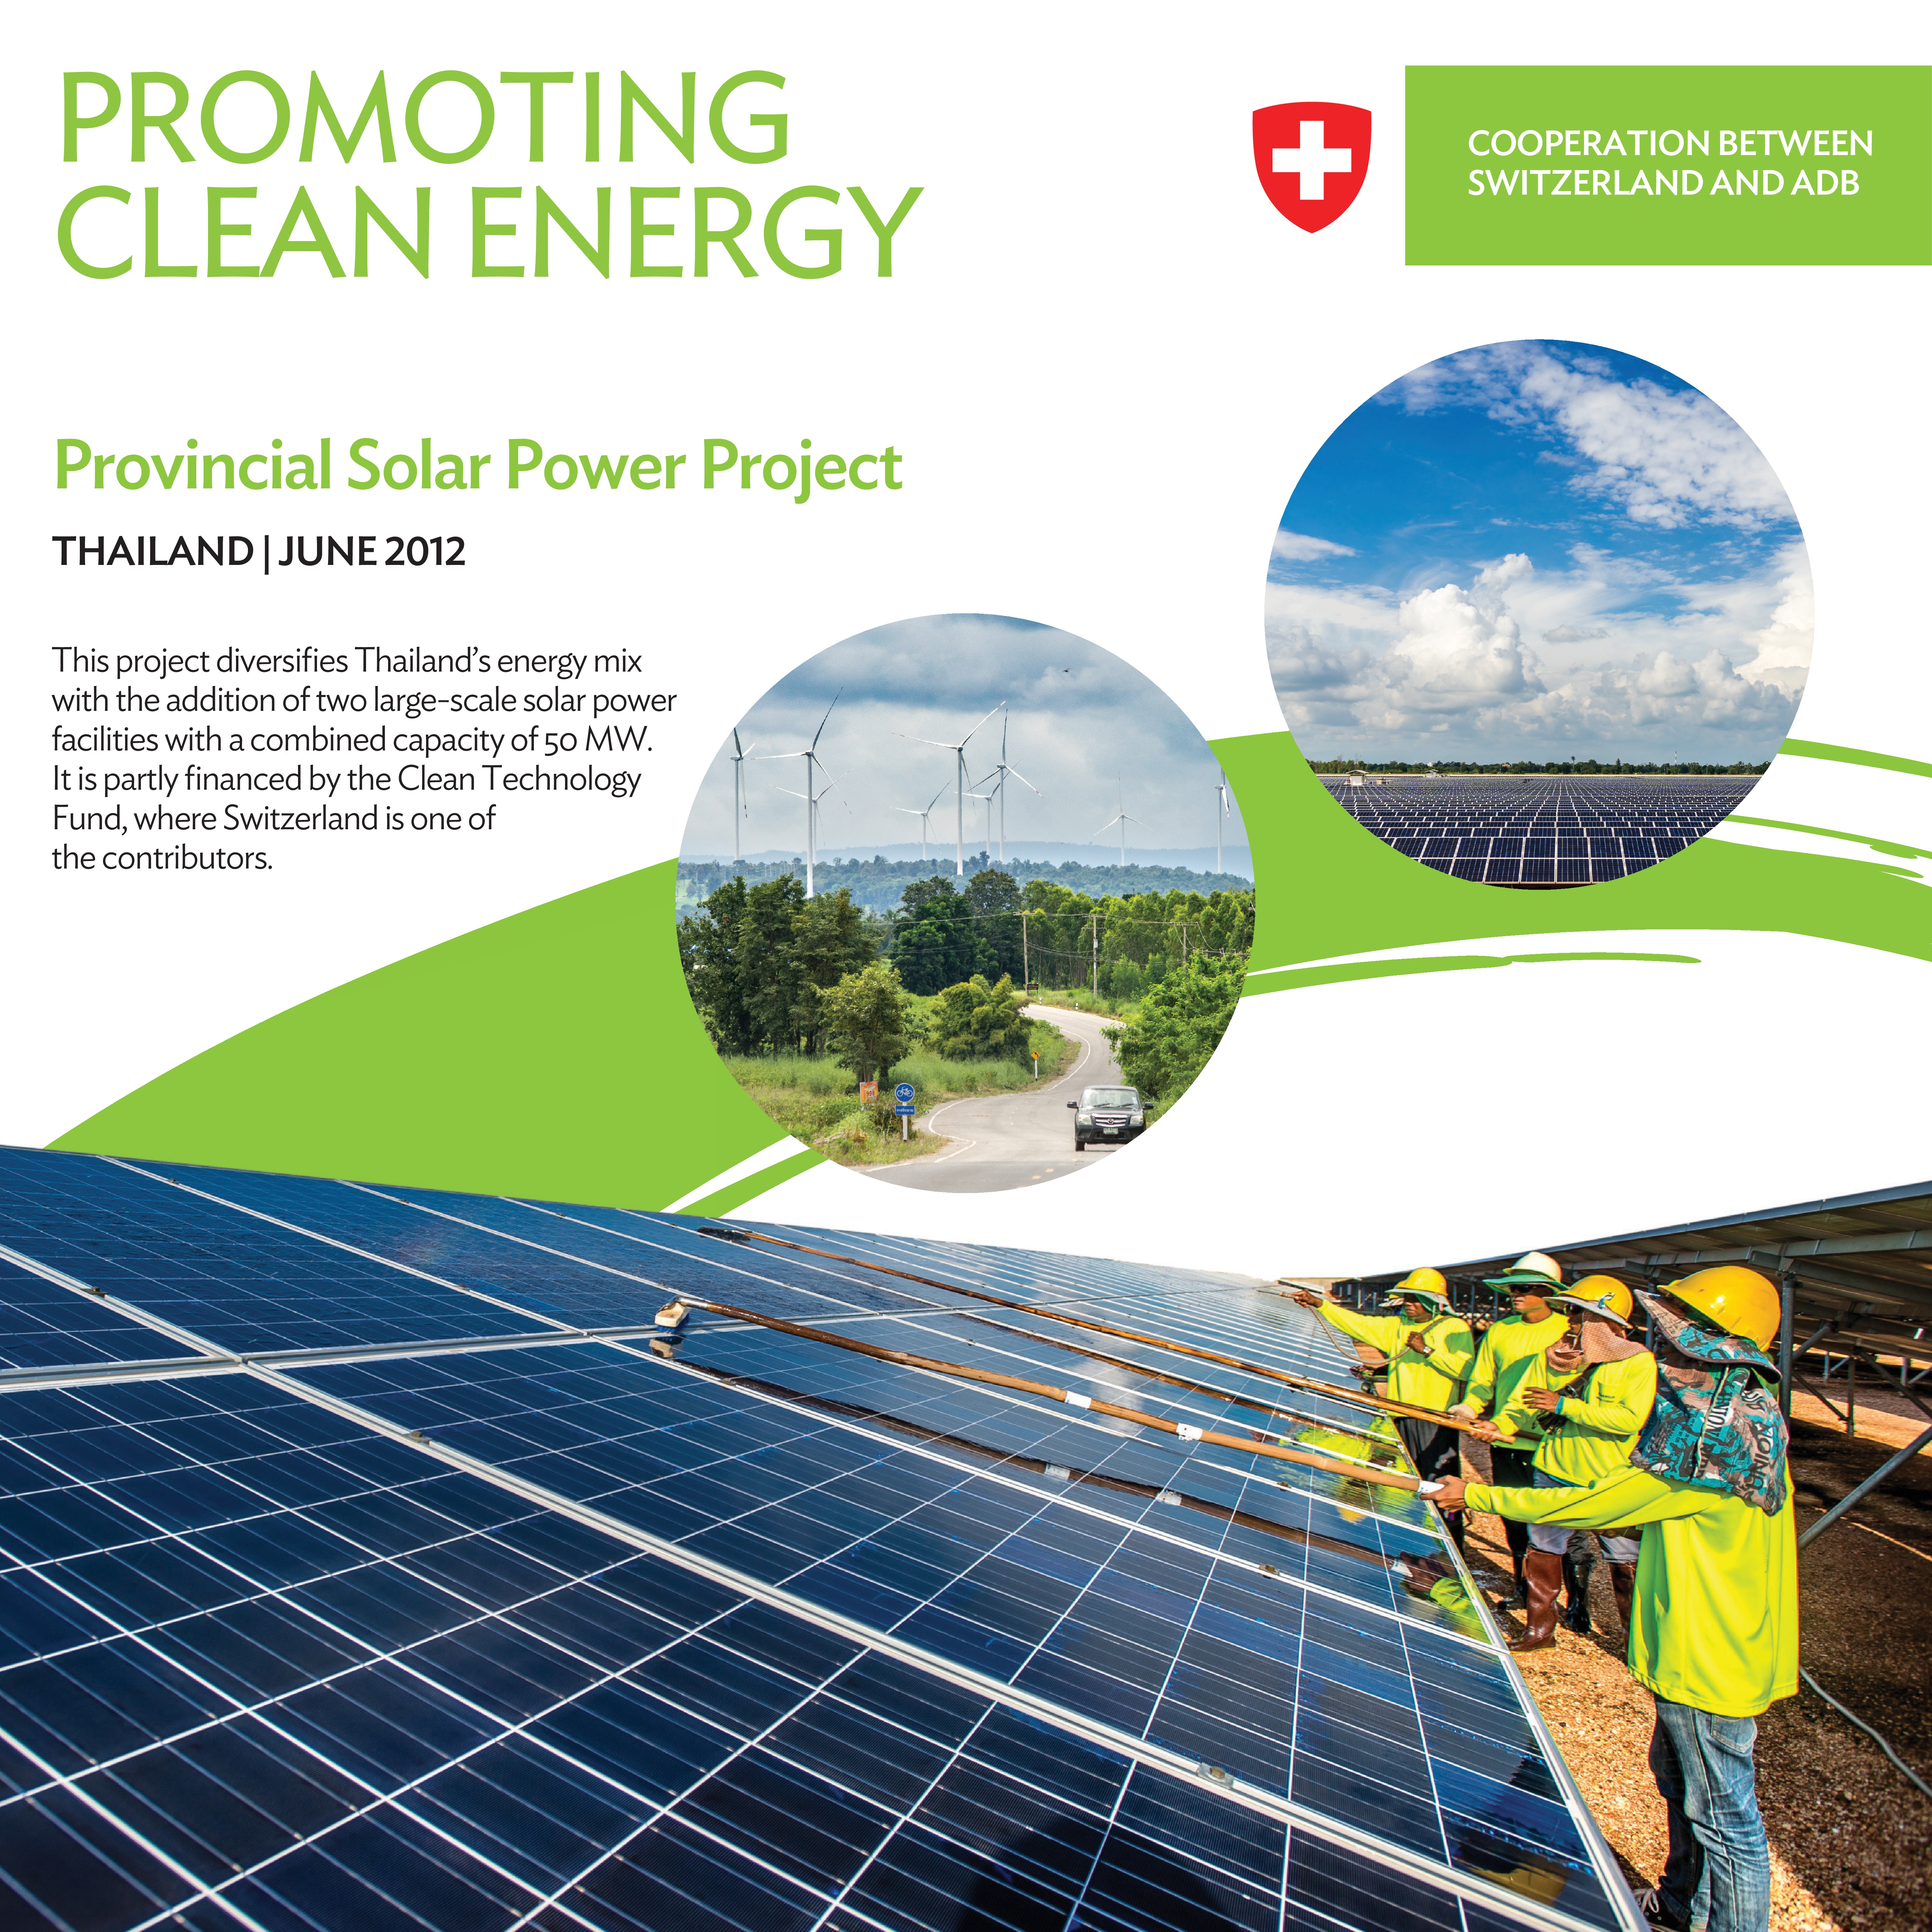 Provincial Solar Power Project, Thailand, June 2012